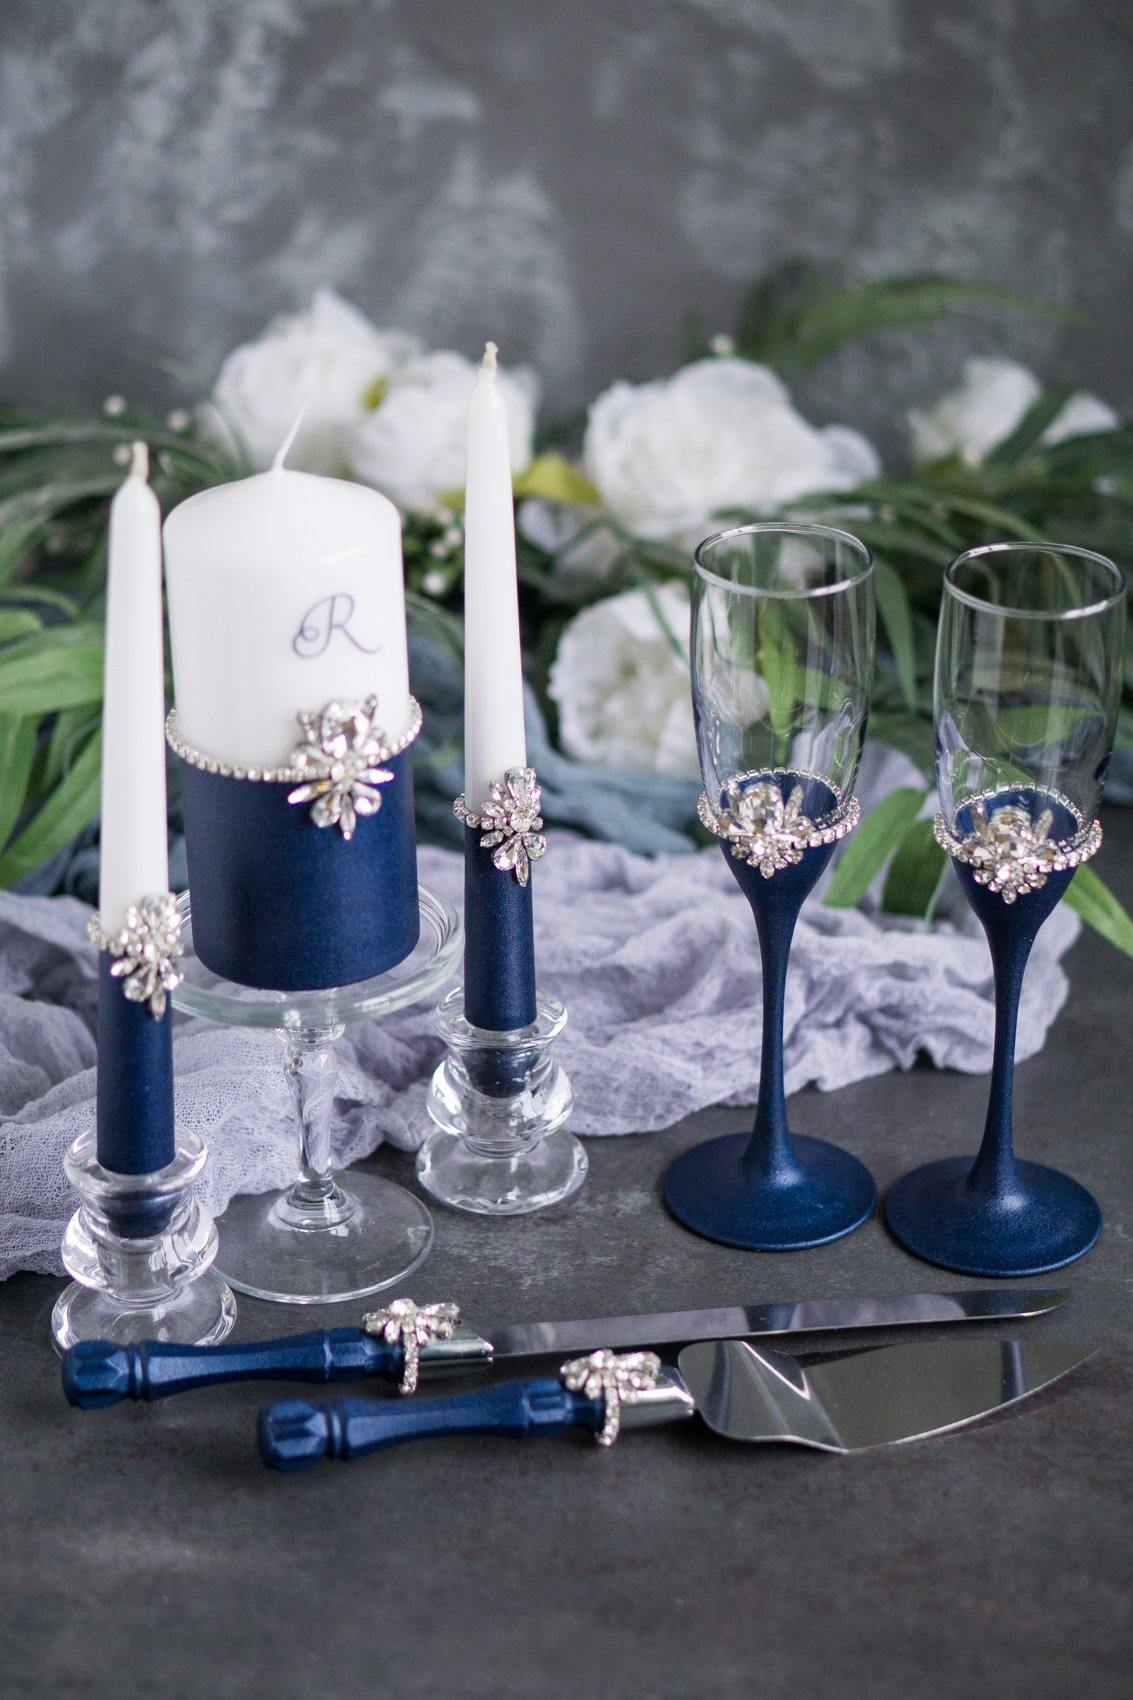 Crystal wedding set of 7 pieces. Navy toasting flutes, 1 plate and 2 forks, cake set. - Amanda - diamoredsshop